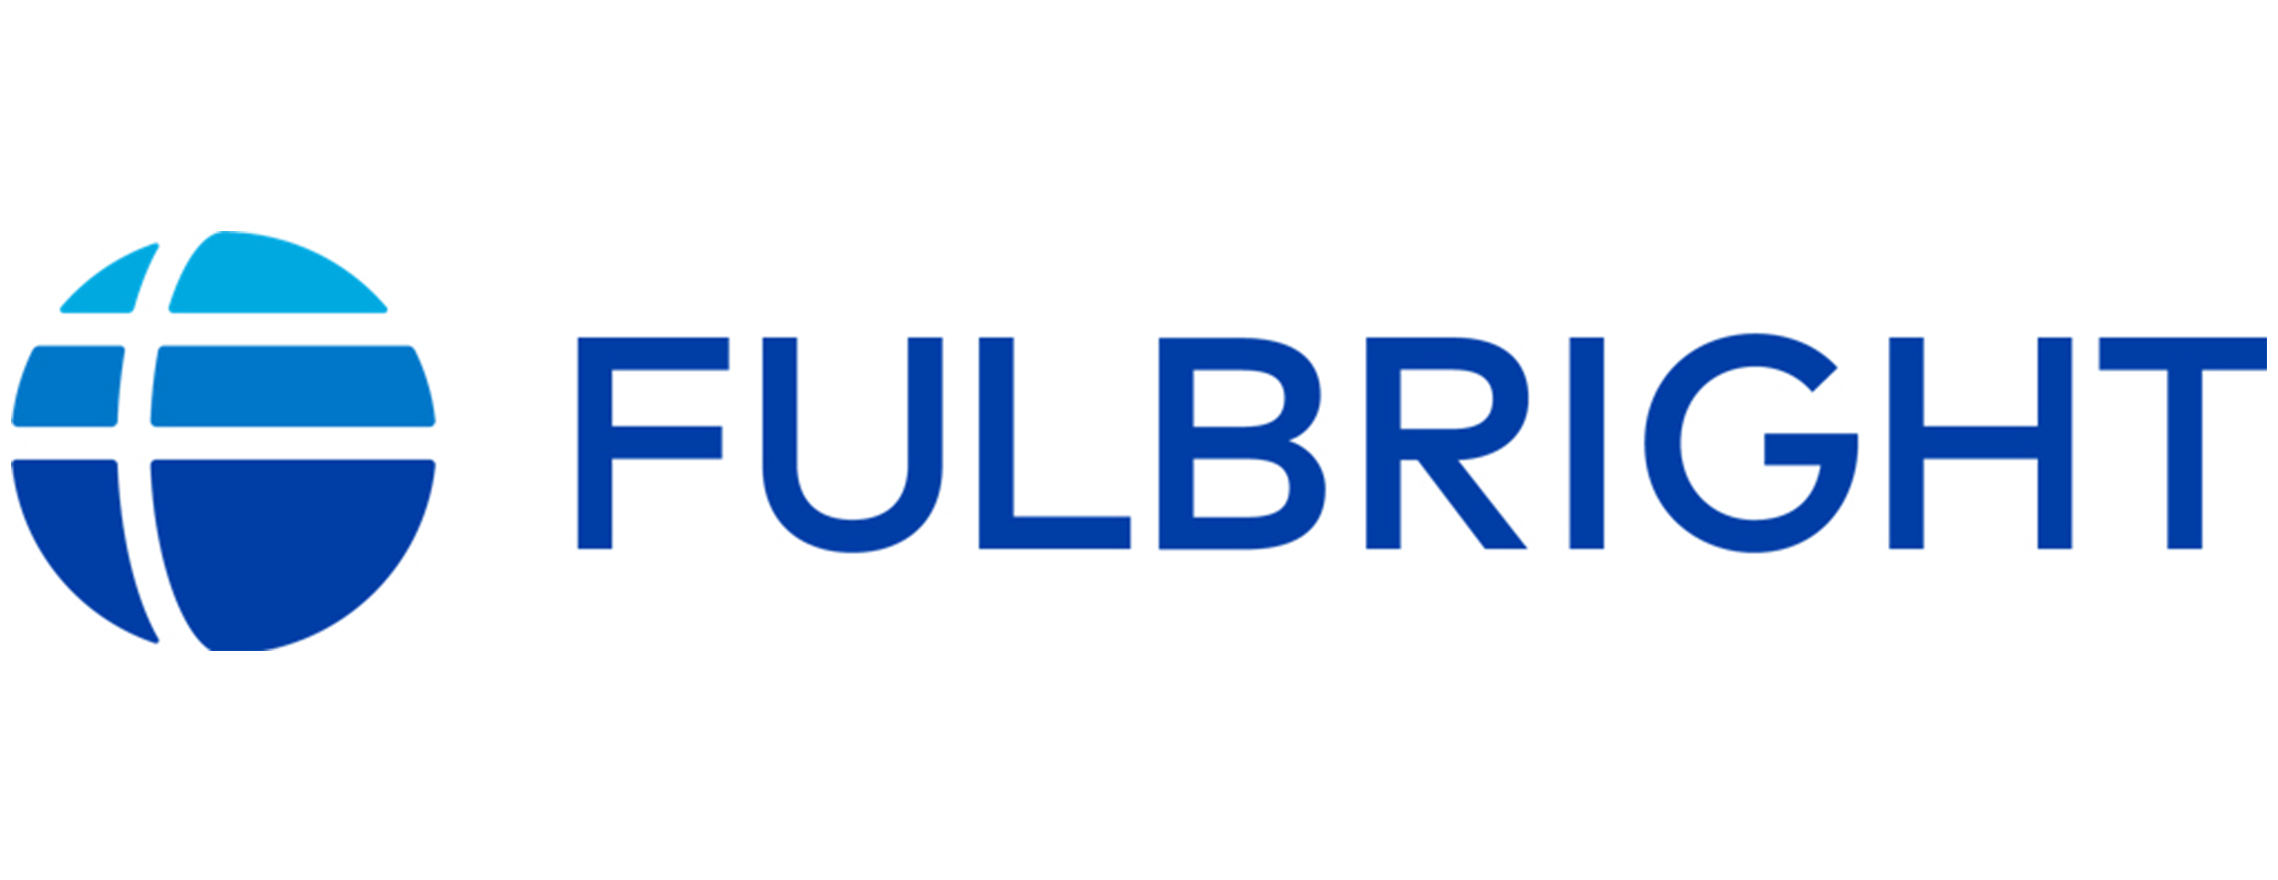 Fulbright log